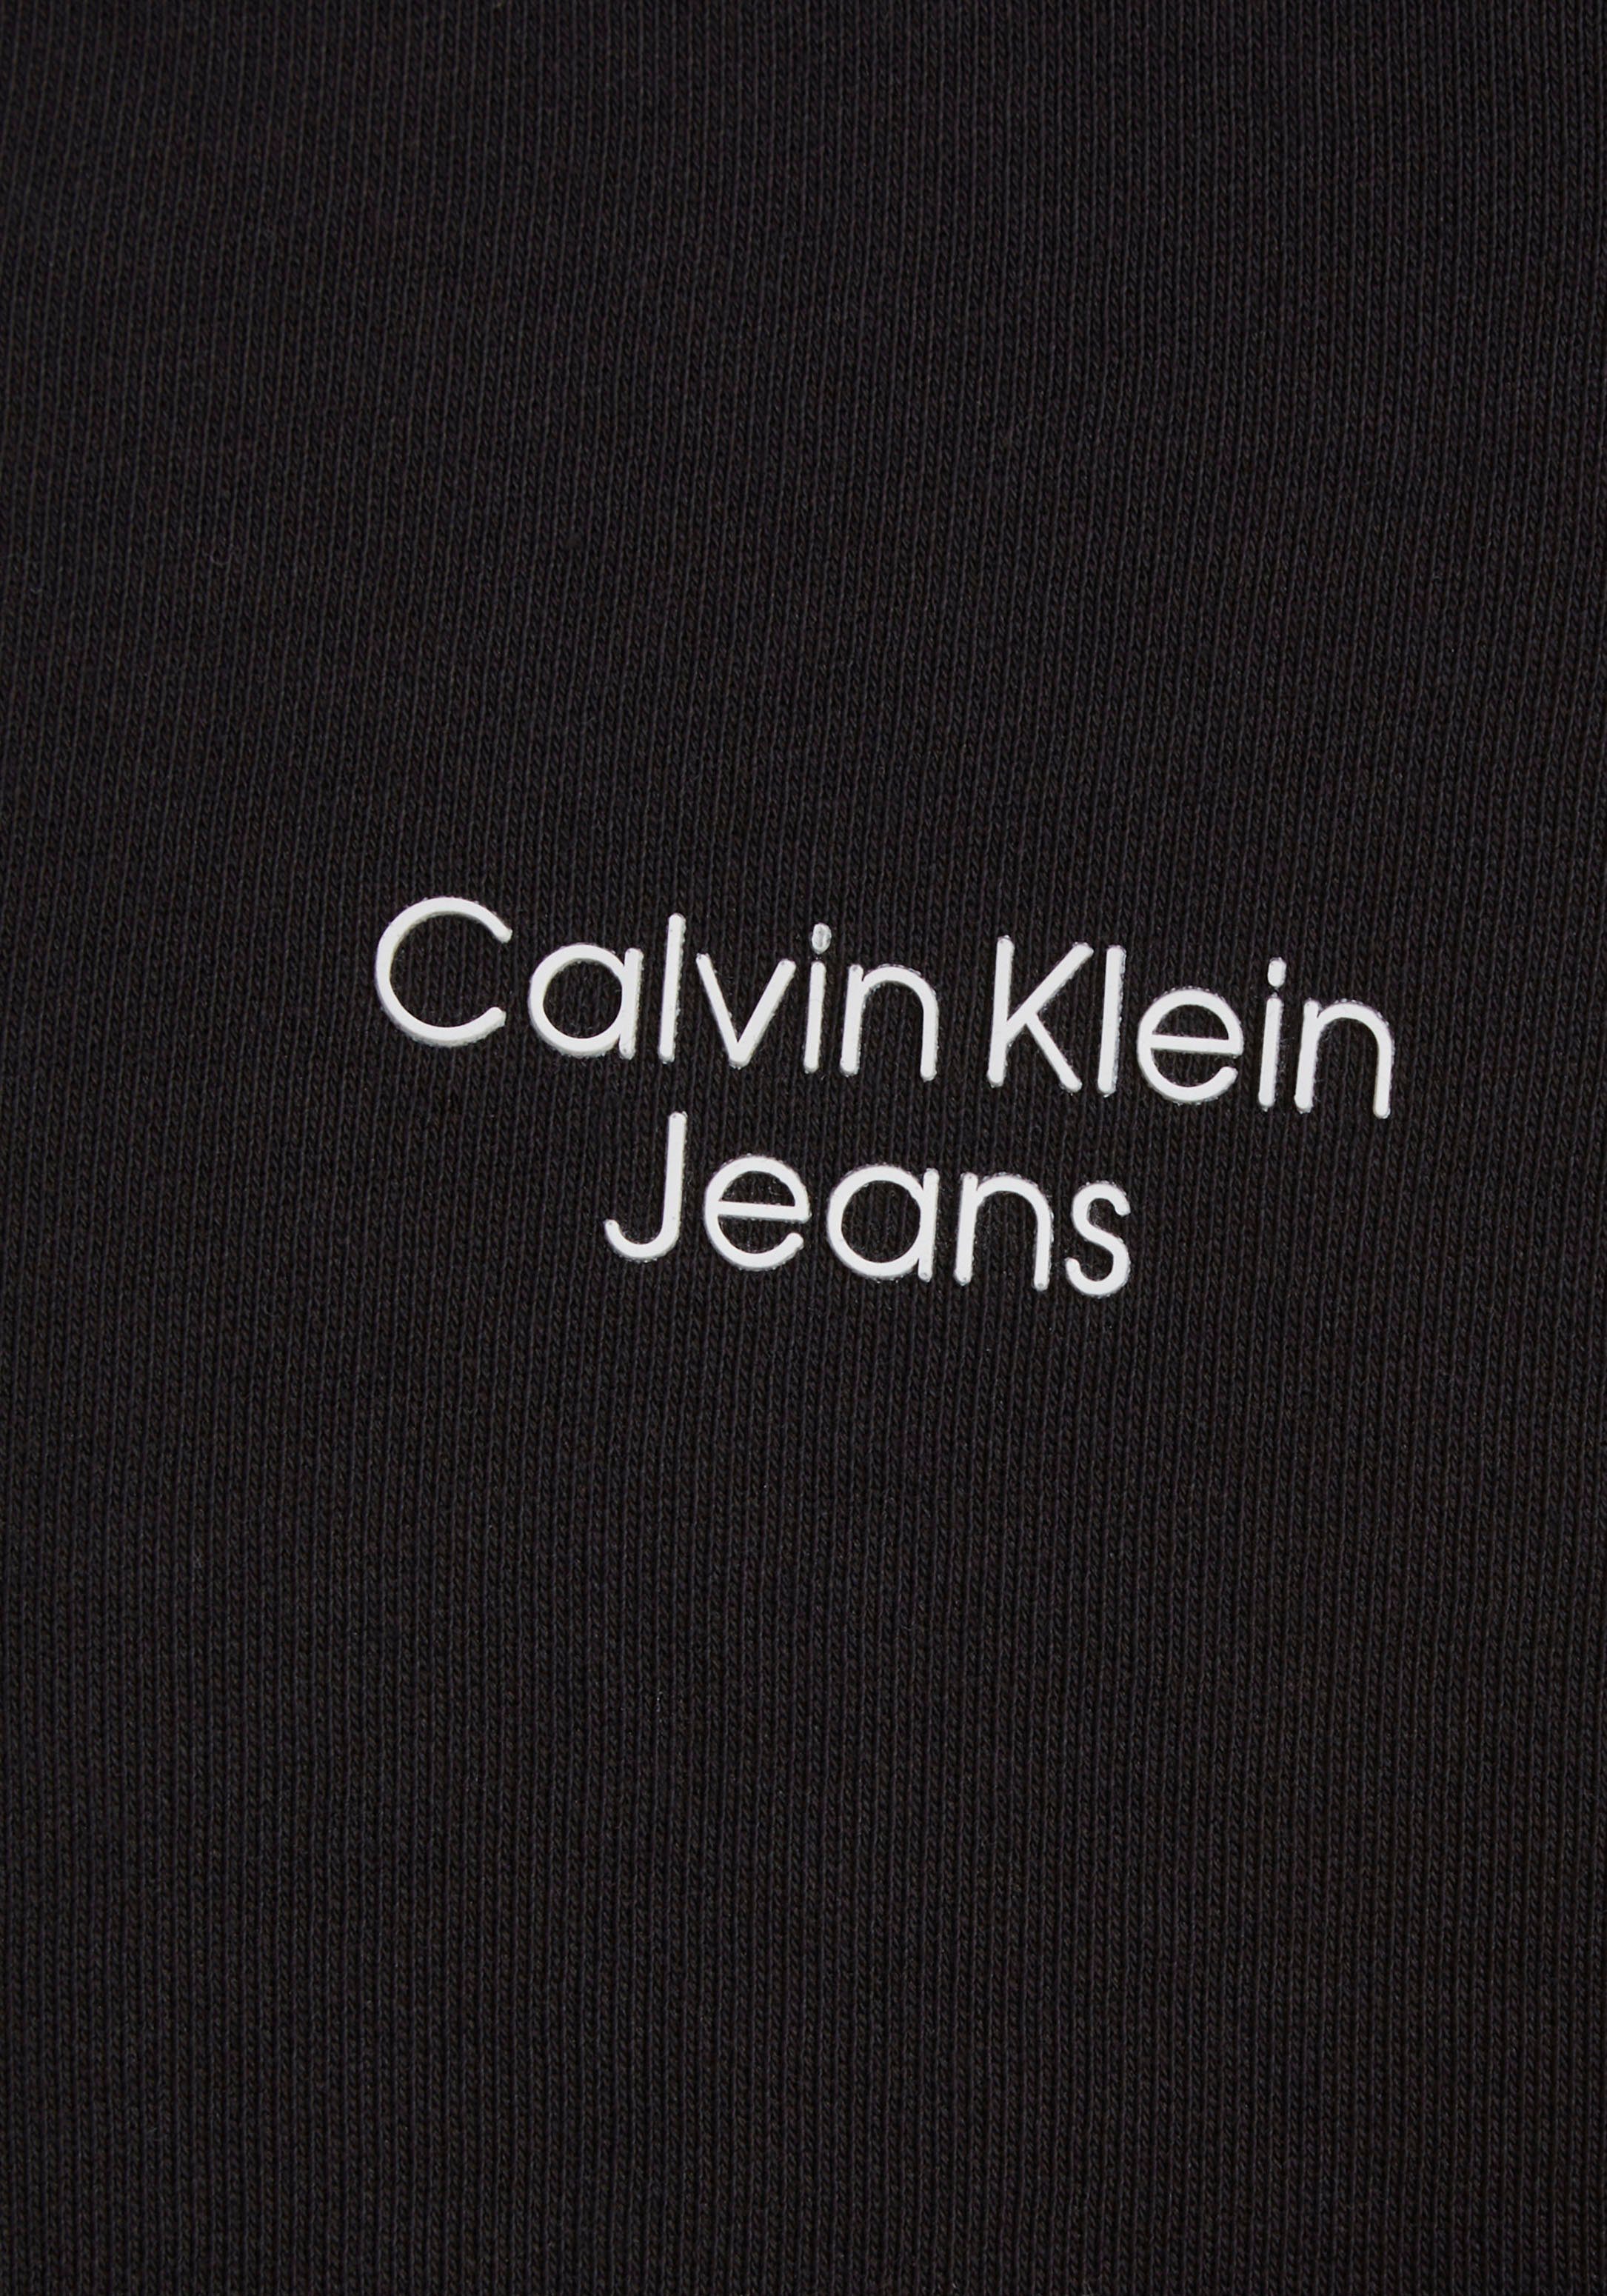 Sweatshirt SWEATSHIRT Calvin STACK CKJ LOGO Klein Jeans